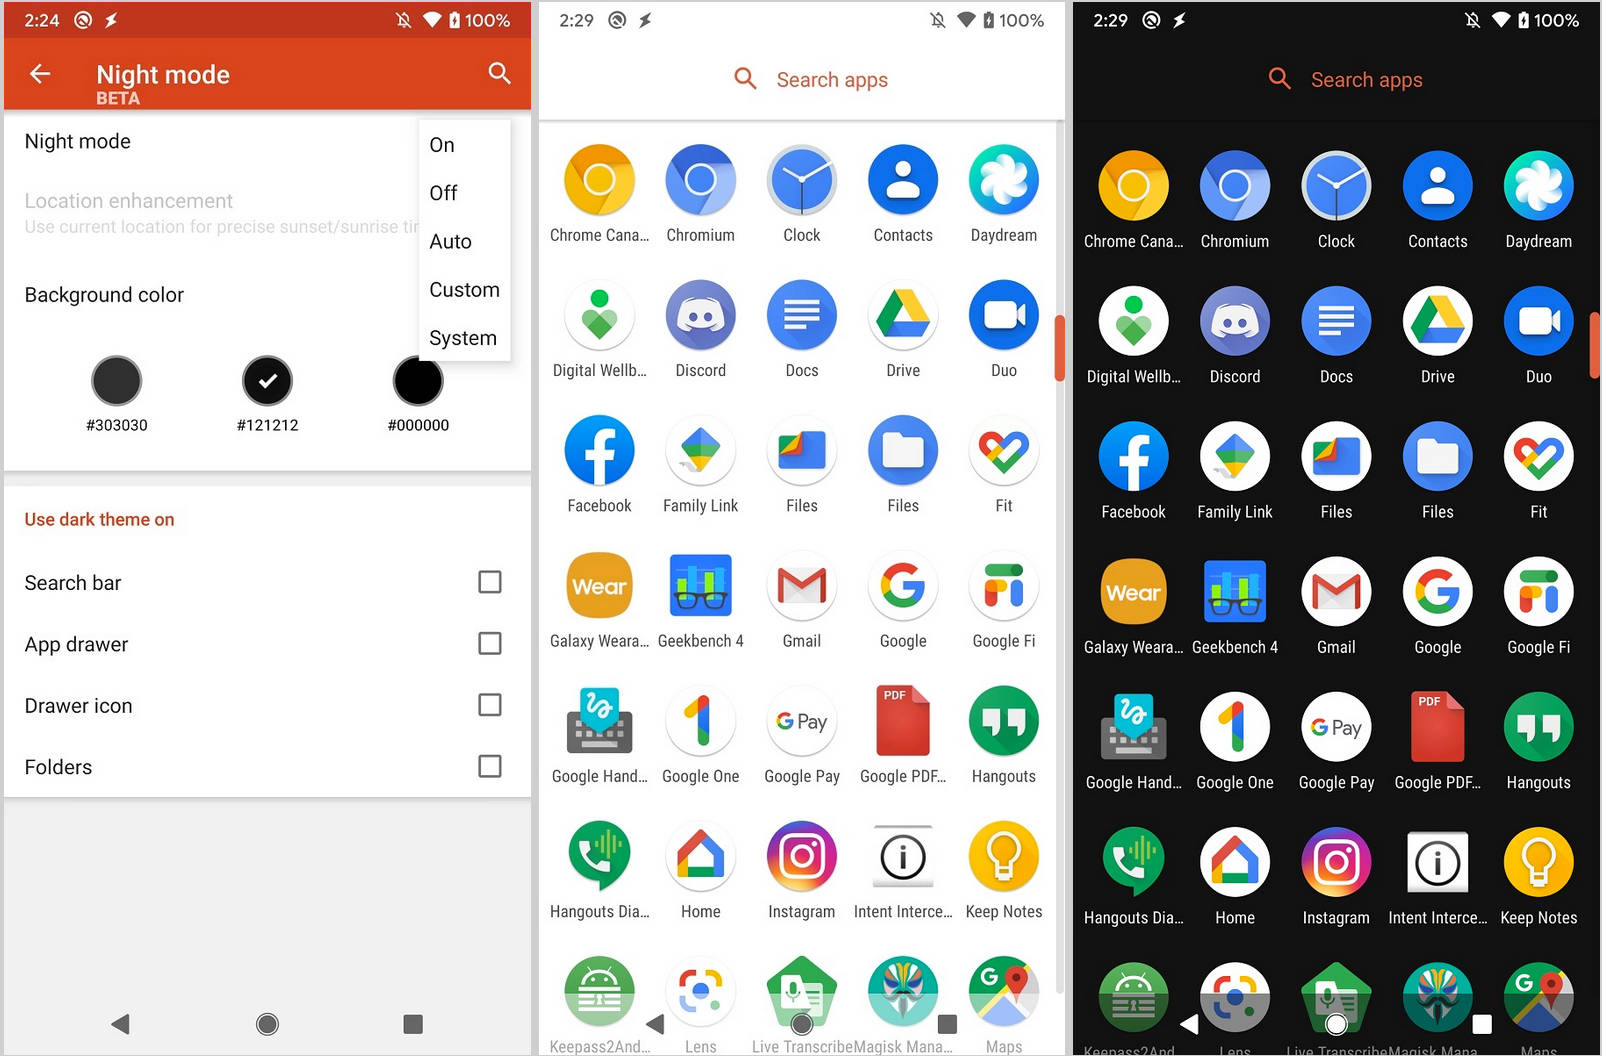 Nova Launcher beta systemowy dark mode Android 10 YouTube kiedy ciemny motyw